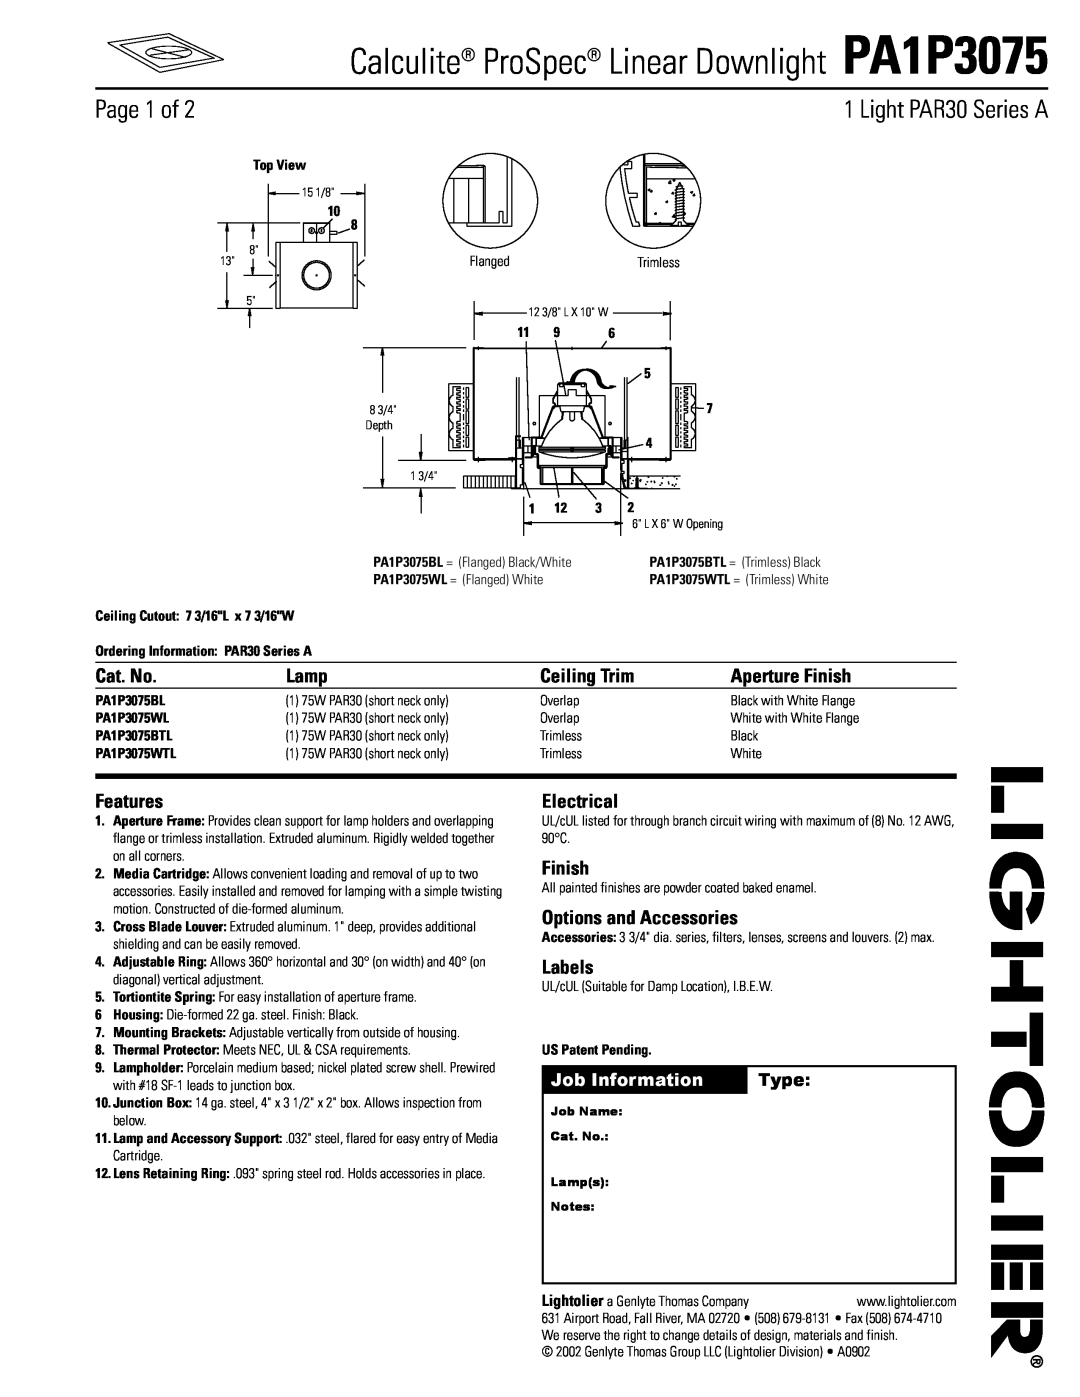 Lightolier PA1P3075 manual Light PAR30 Series A, Page 1 of, Cat. No, Lamp, Aperture Finish, Features, Electrical, Labels 